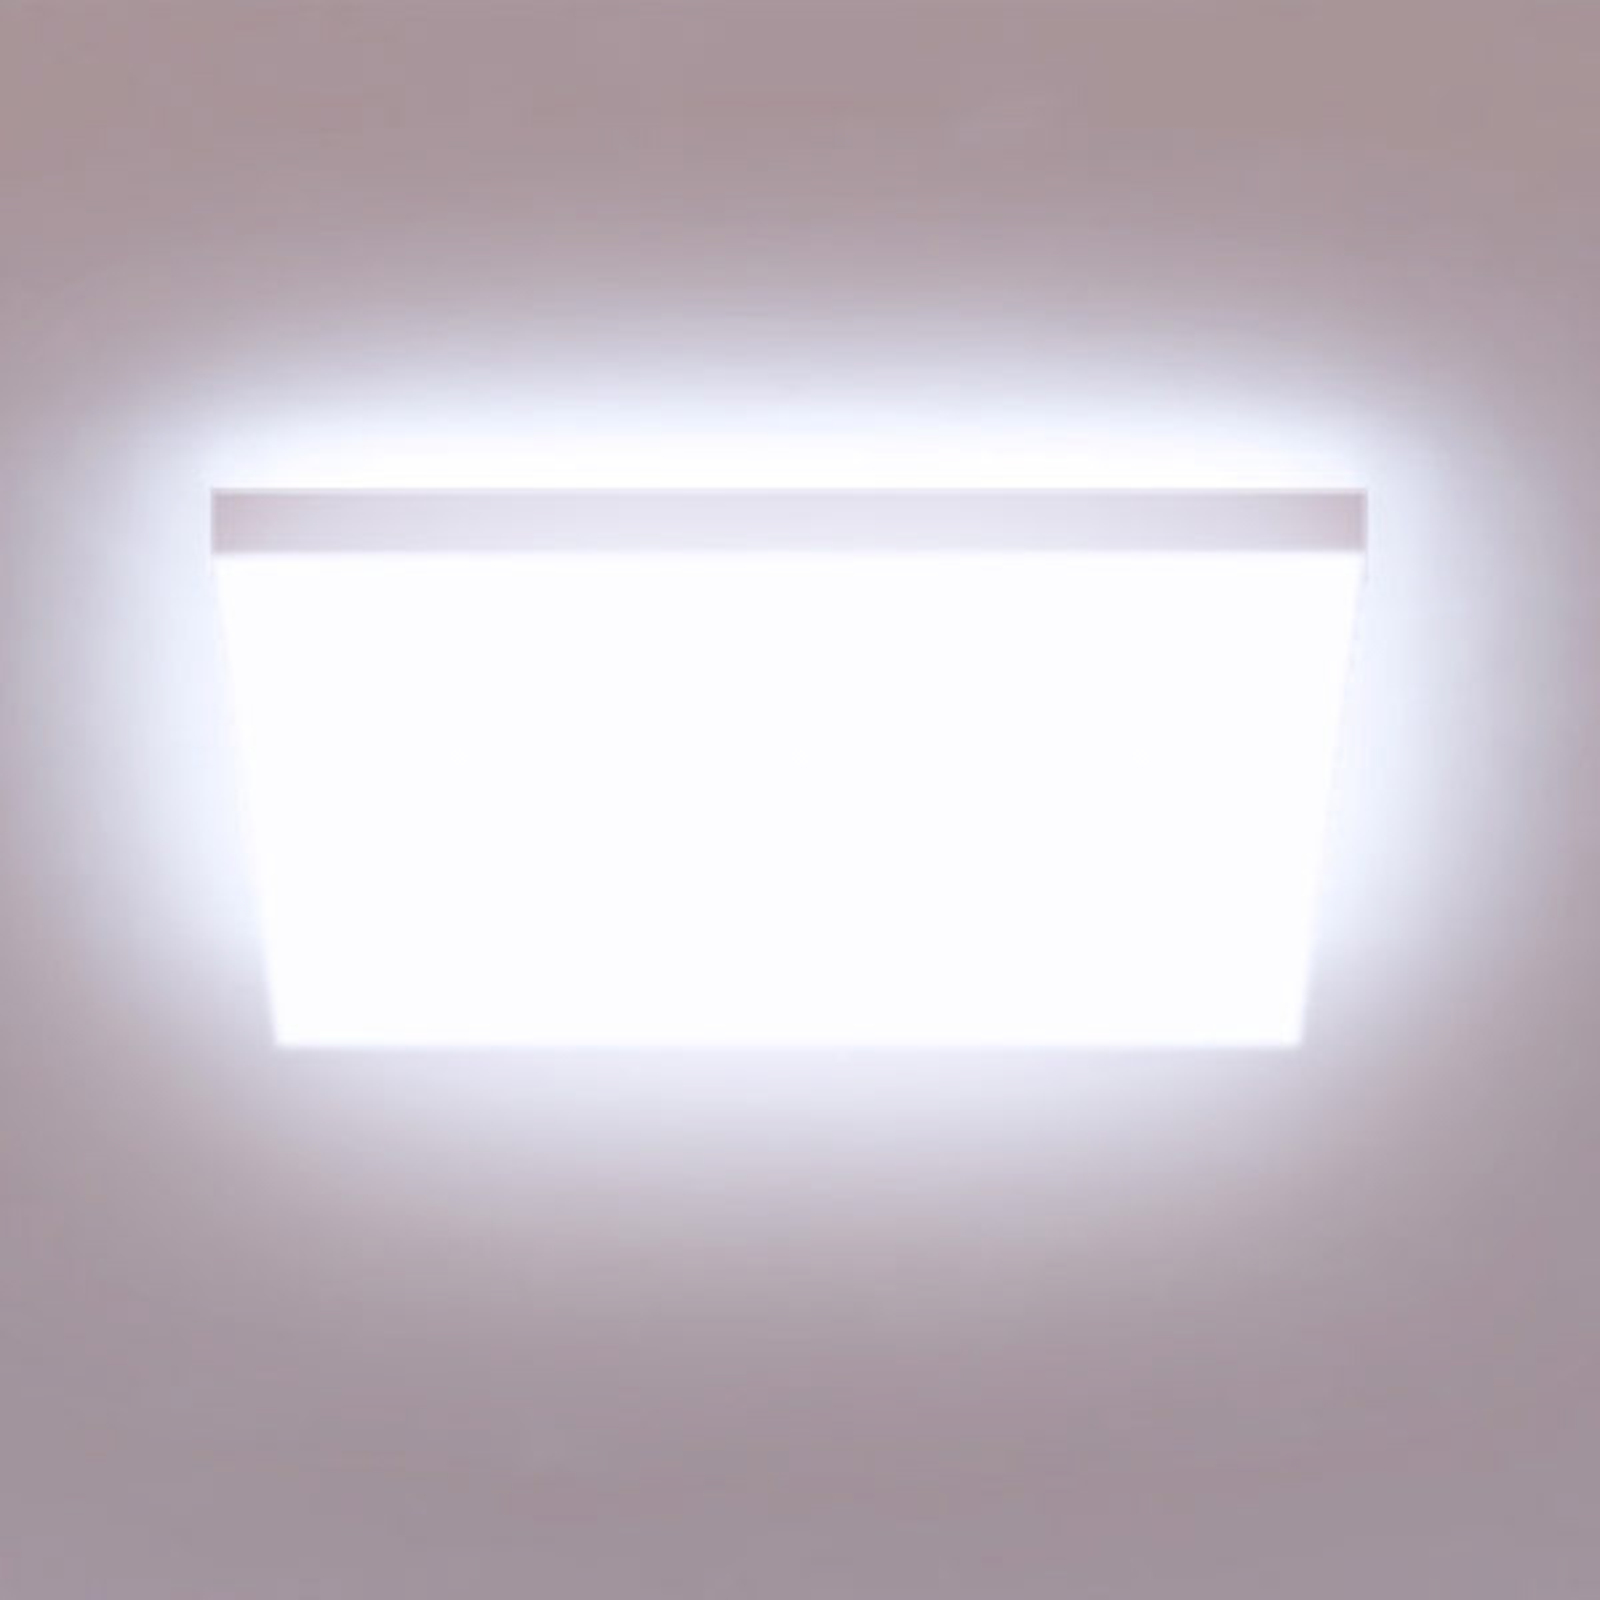 Müller Licht tint LED panelė Loris, 45x45cm